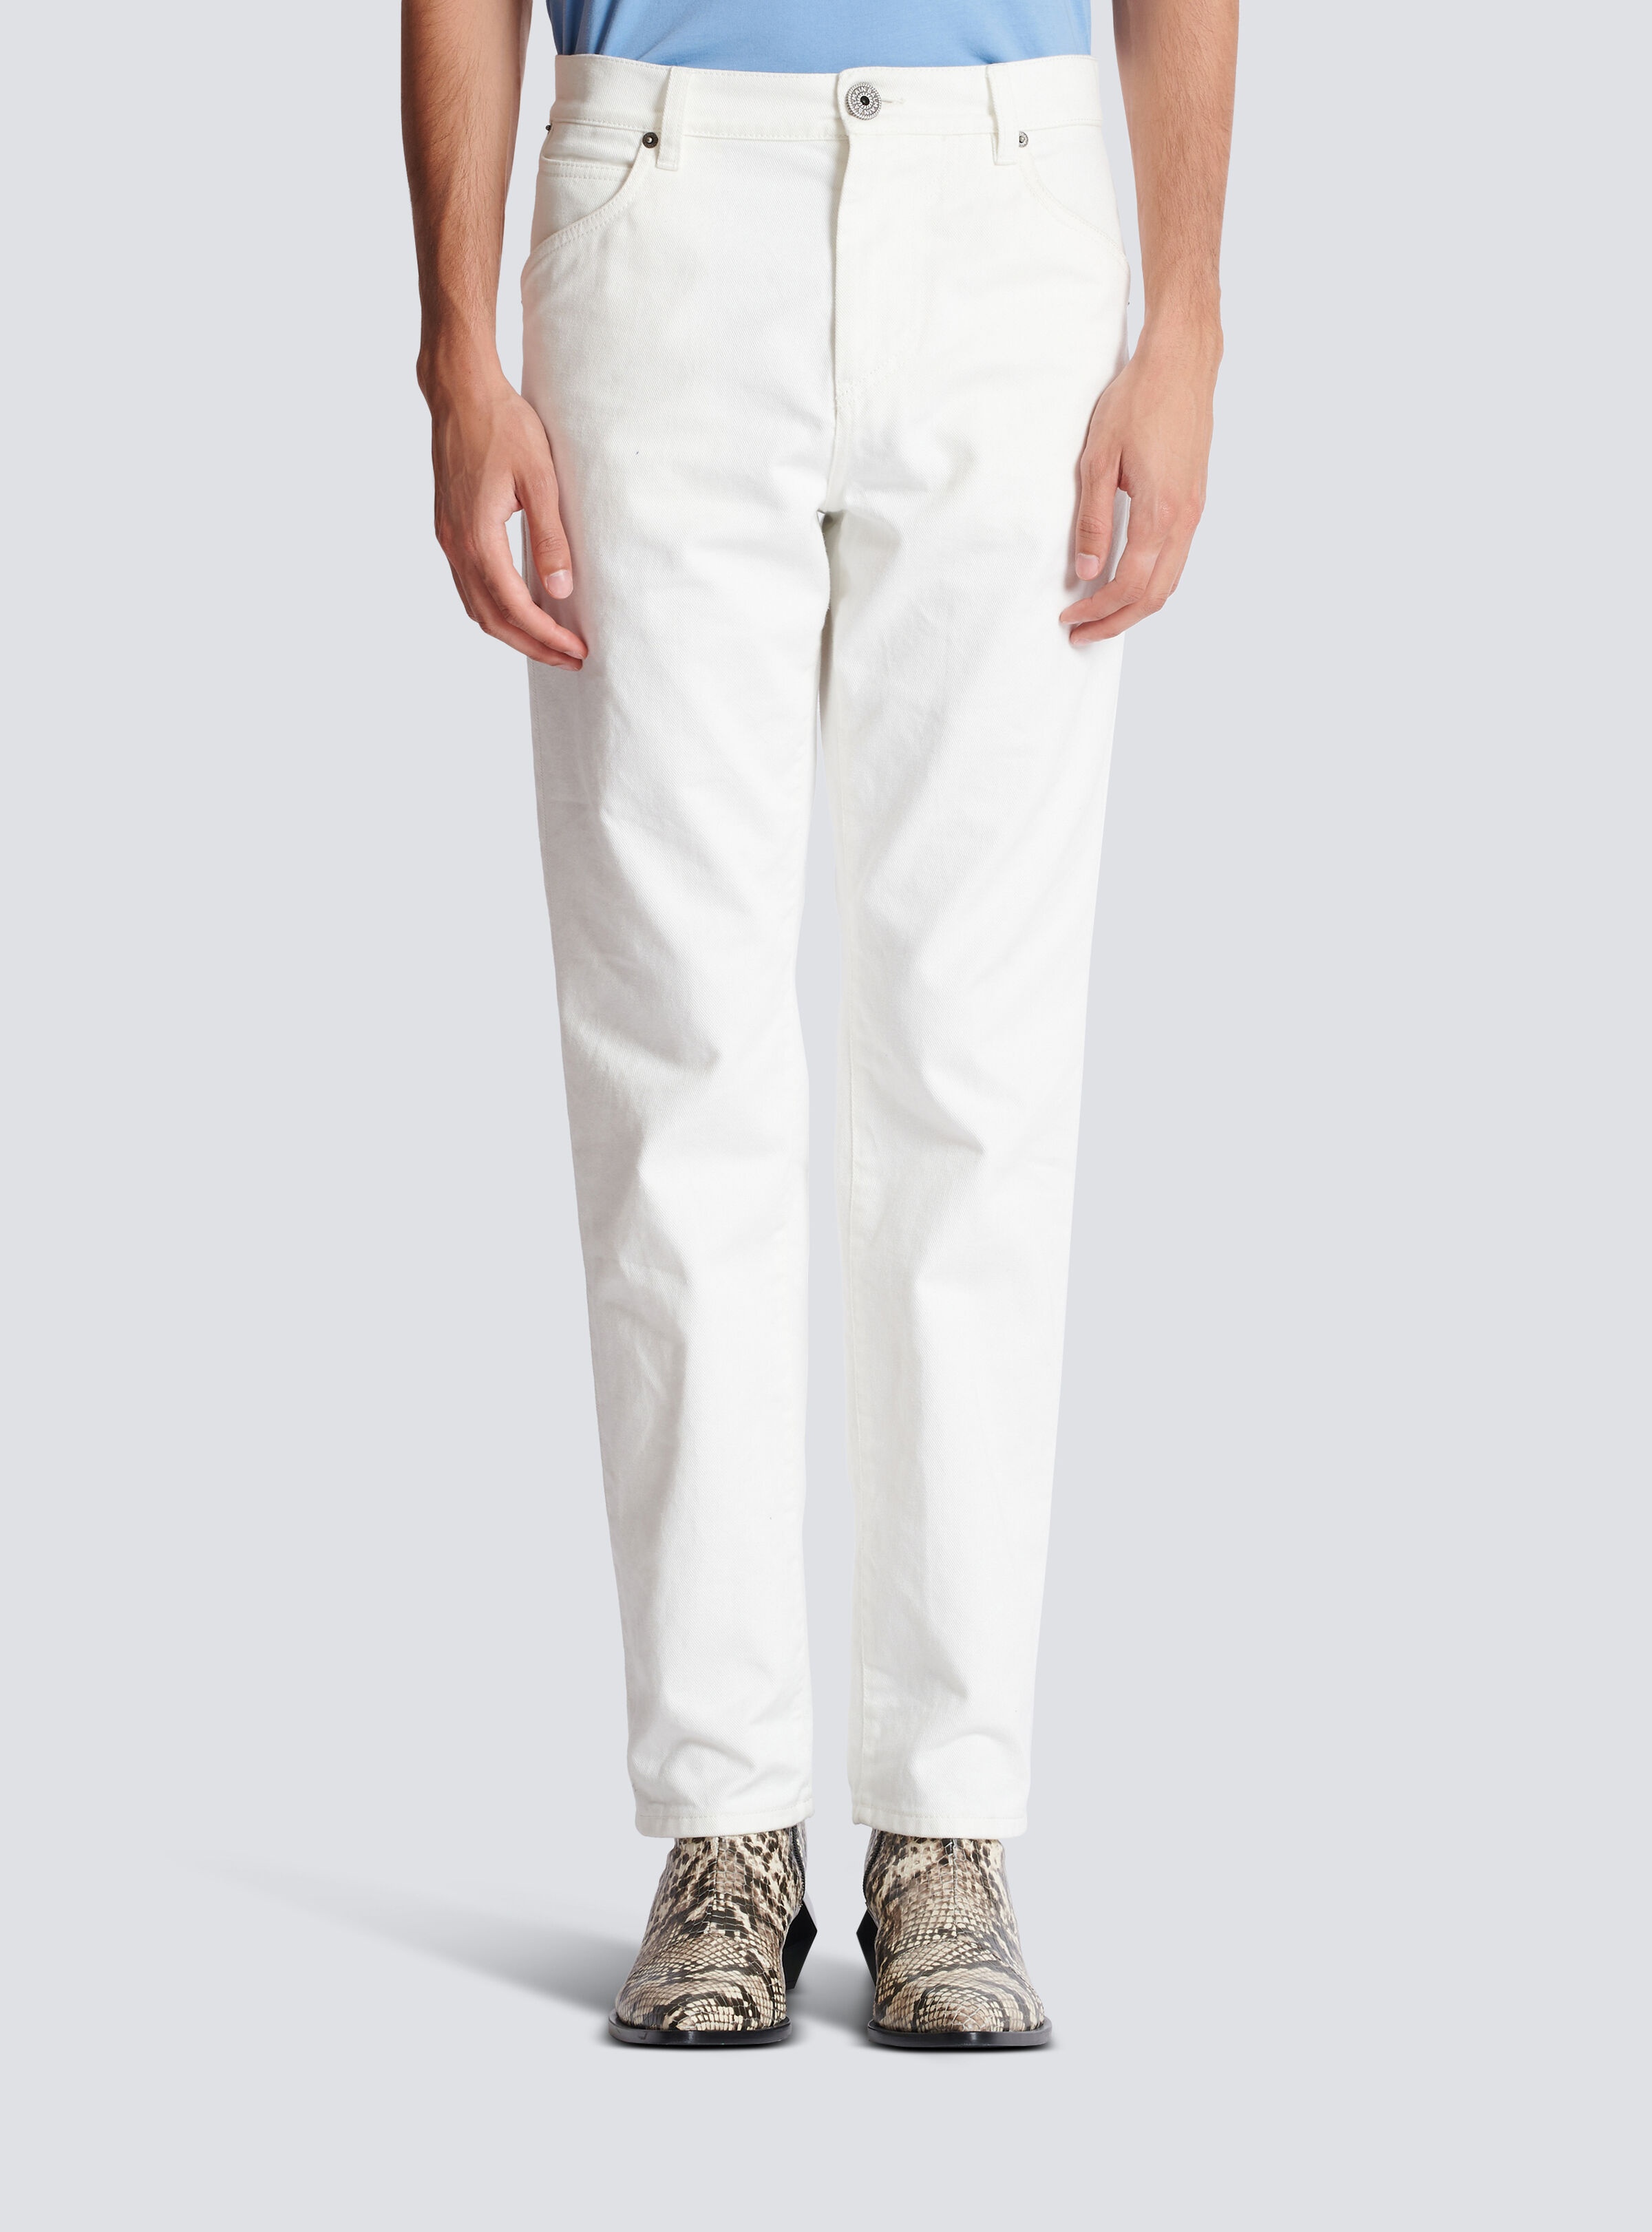 White denim jeans - 5